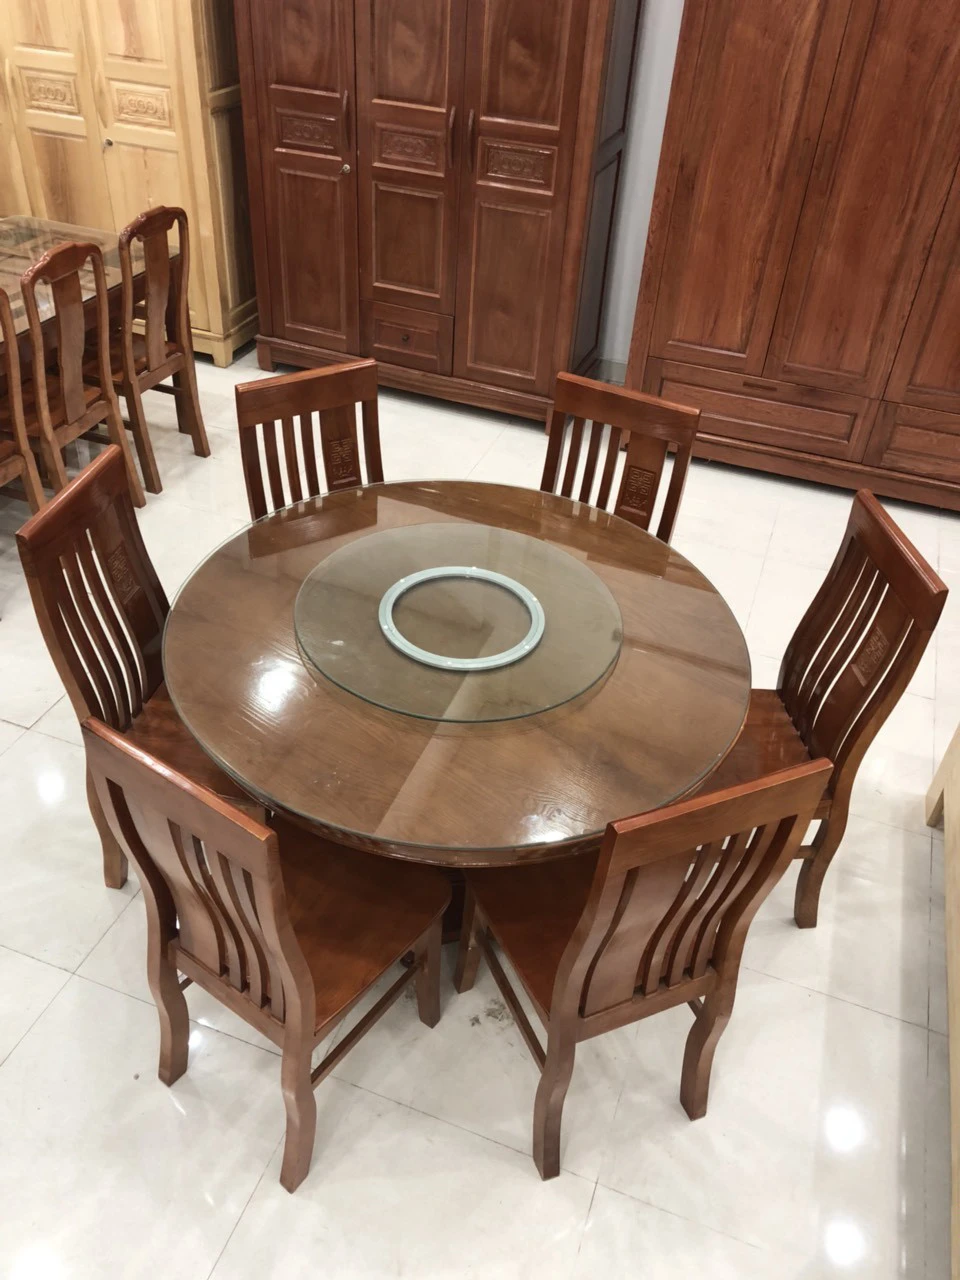 Bộ bàn ăn tròn 1m2, 6 ghế gỗ